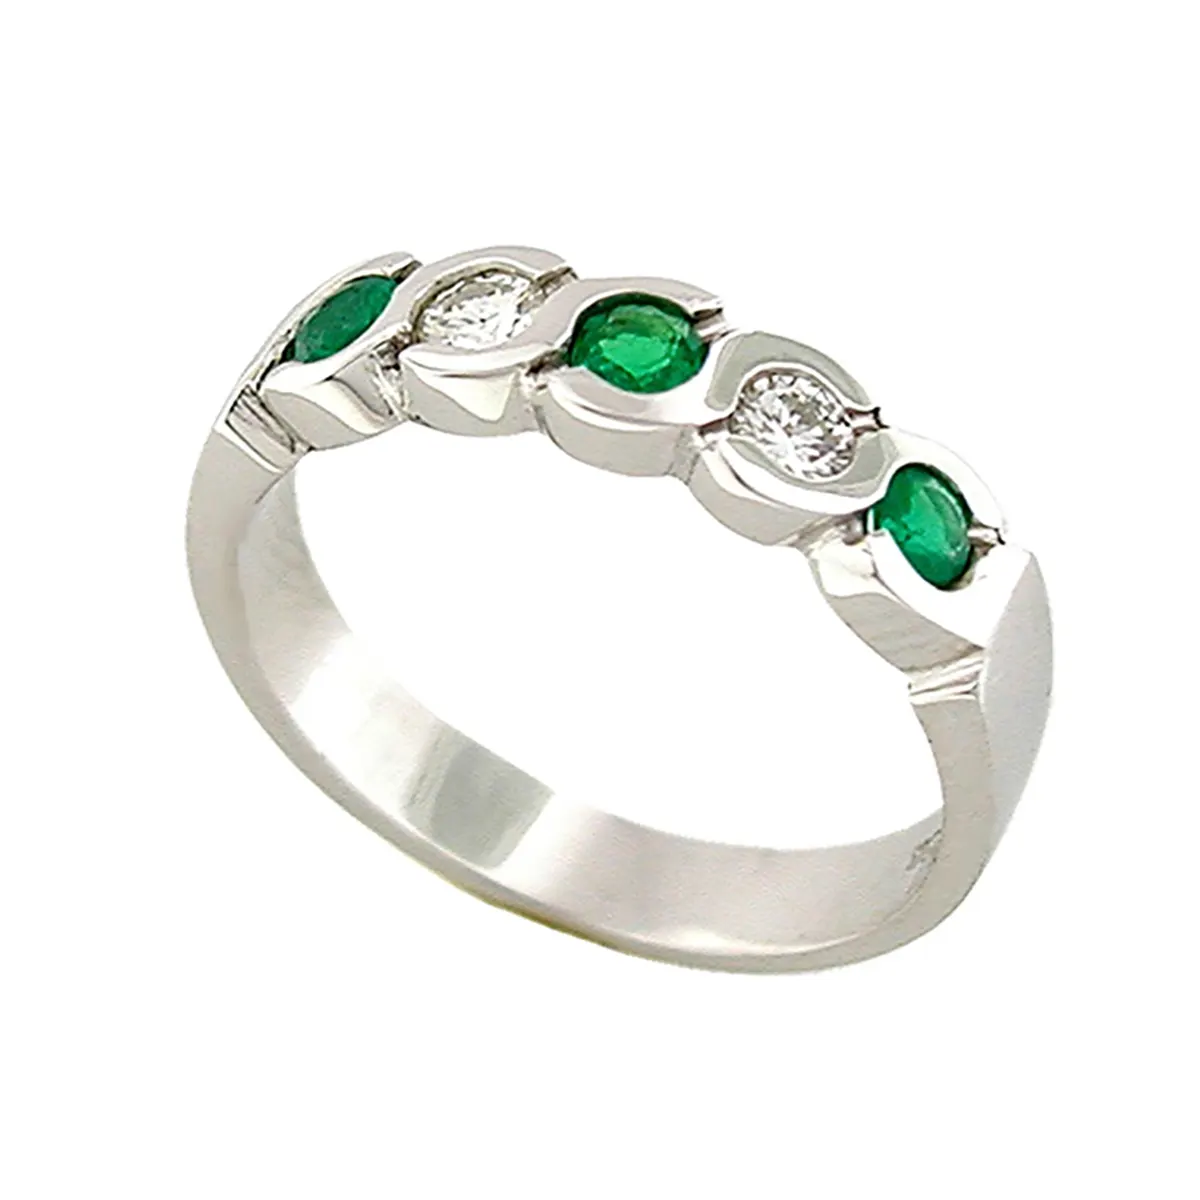 emerald-and-diamond-half-eternity-wedding-band-in-18k-white-gold-bezel-setting